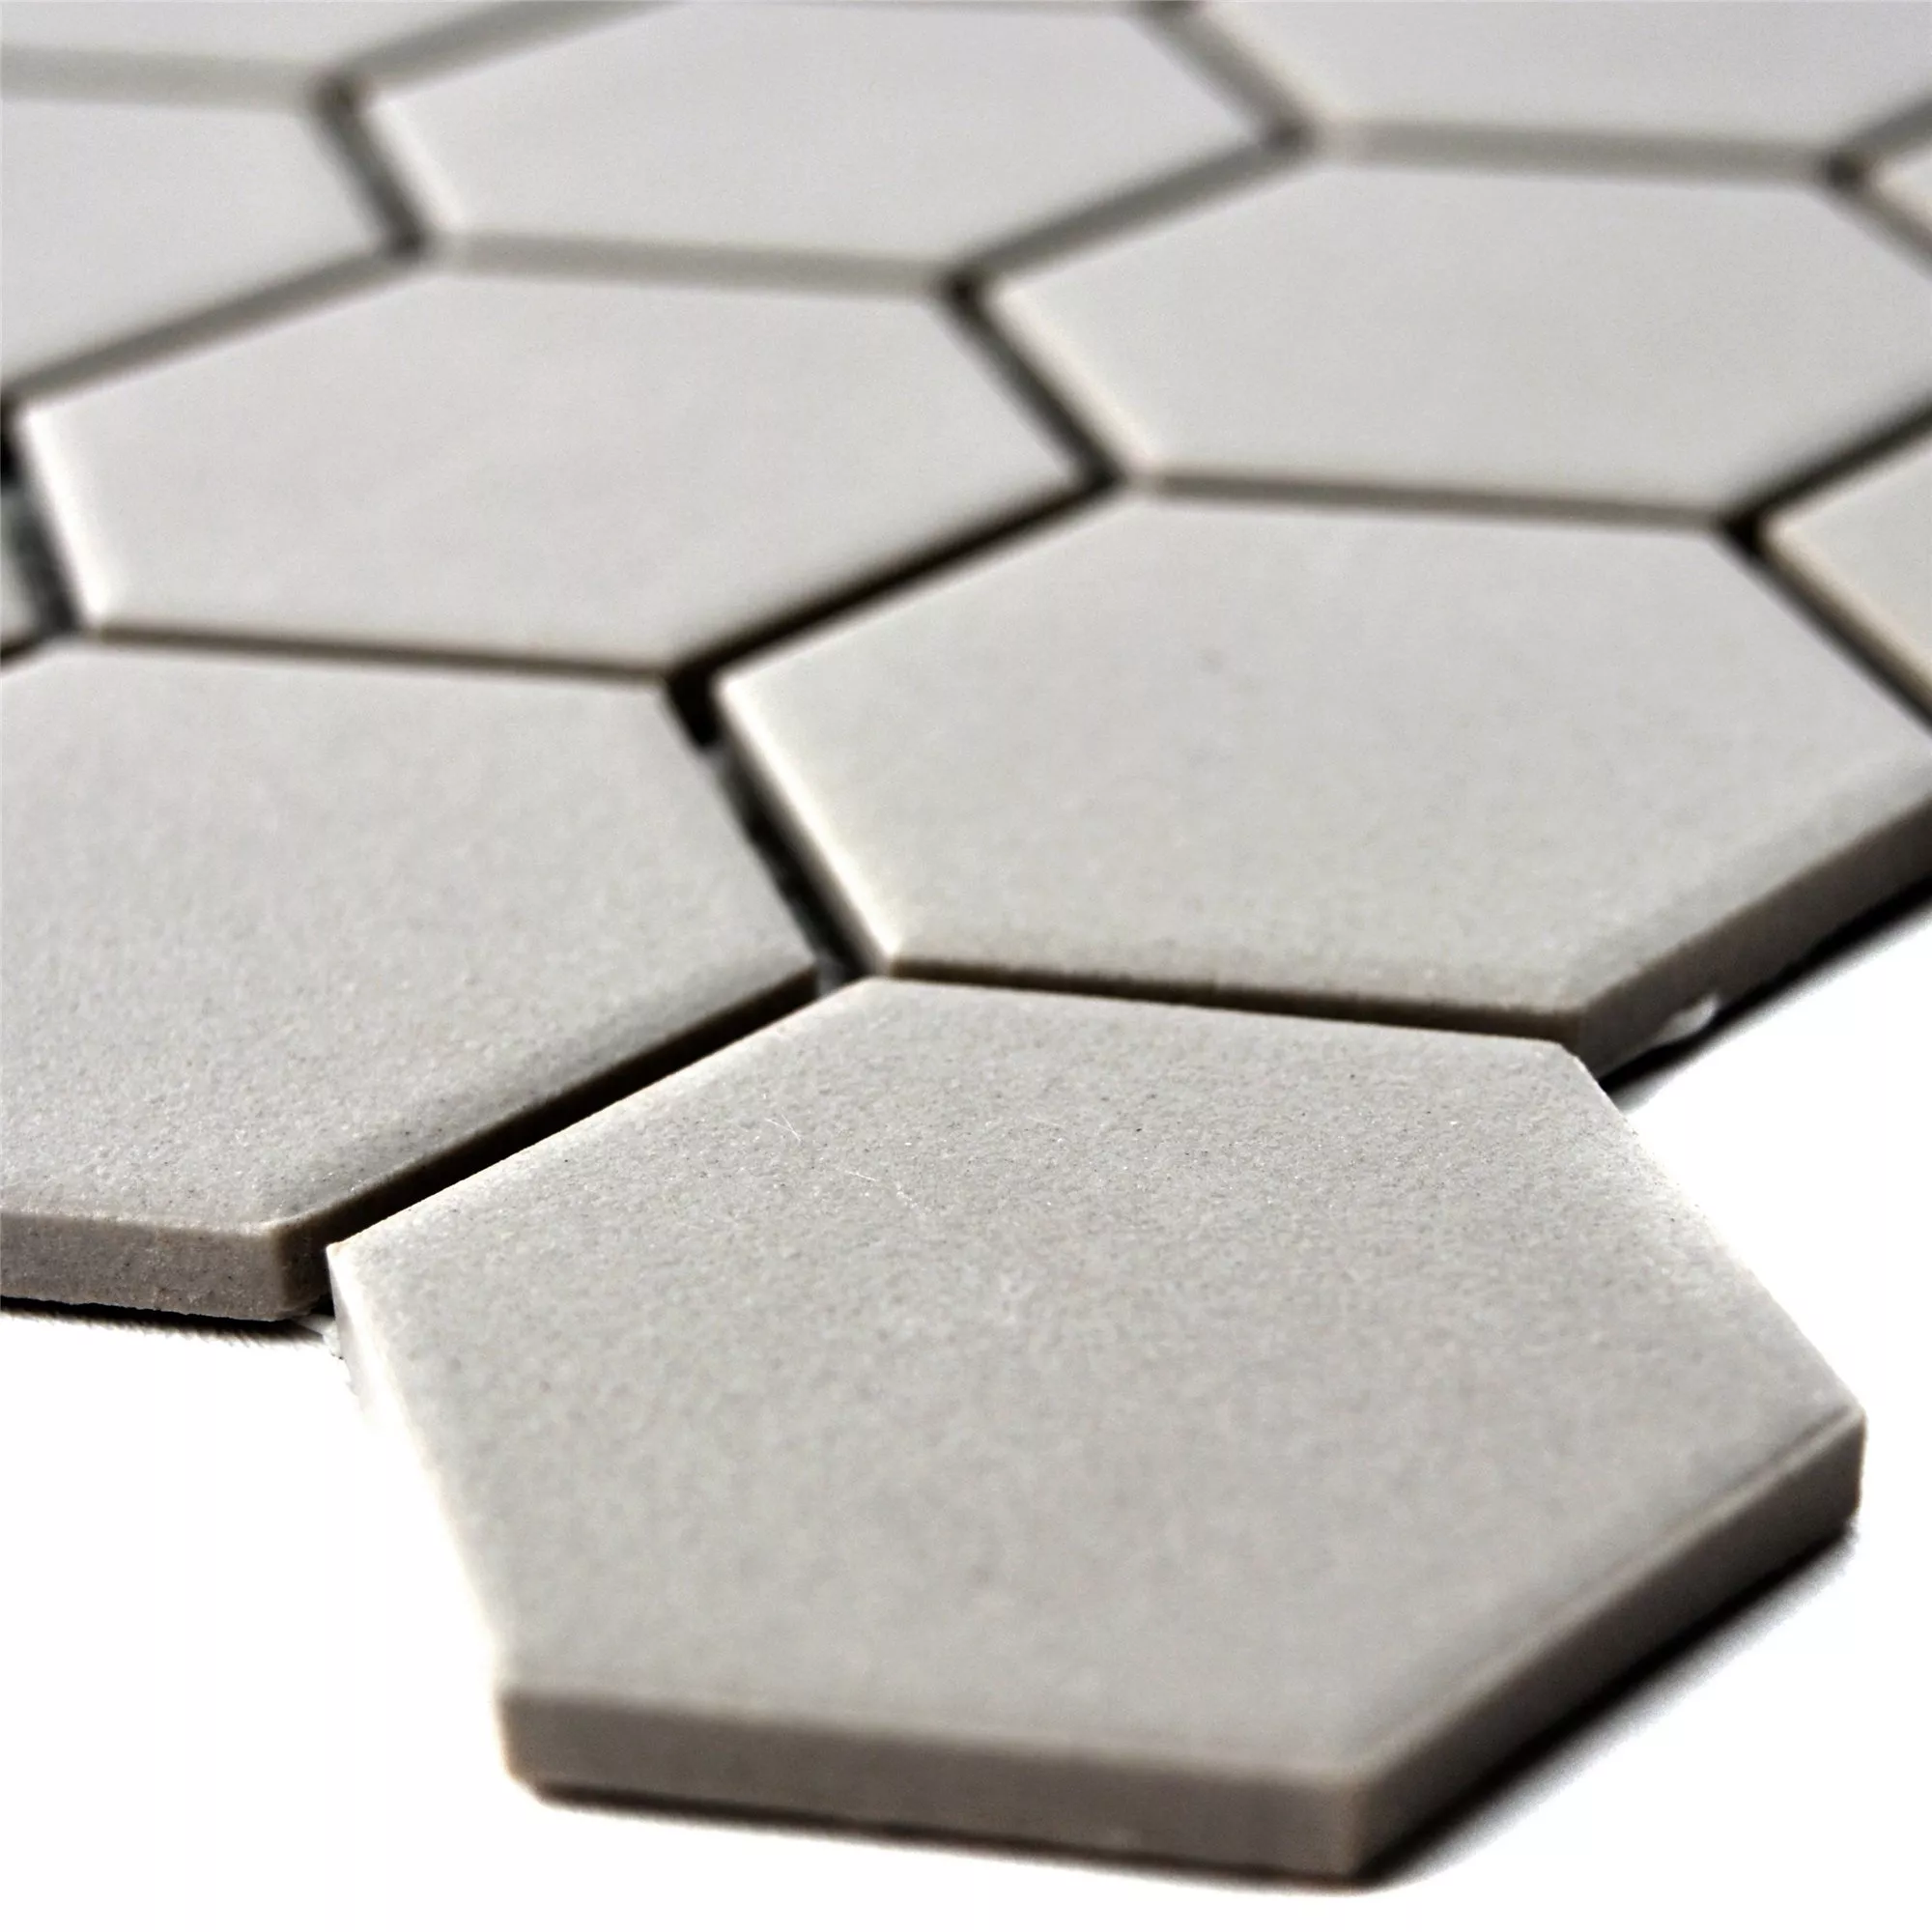 Sample Ceramic Mosaic Tiles Begomil Unglazed Grey